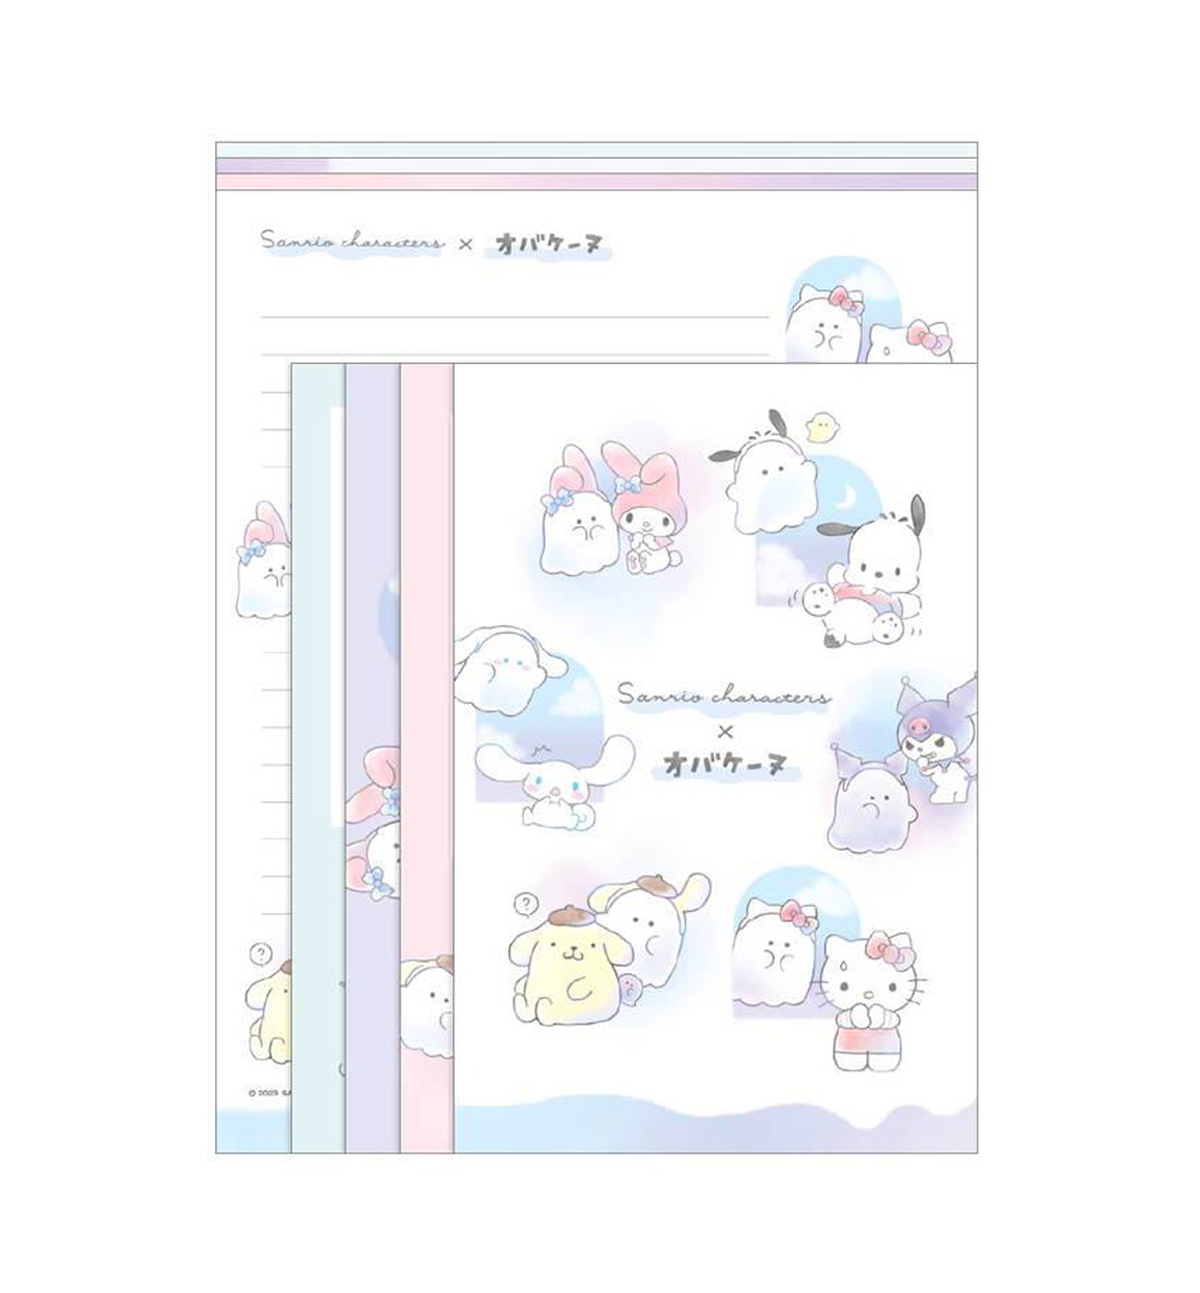 Sanrio Character x Obakenu Letter Set